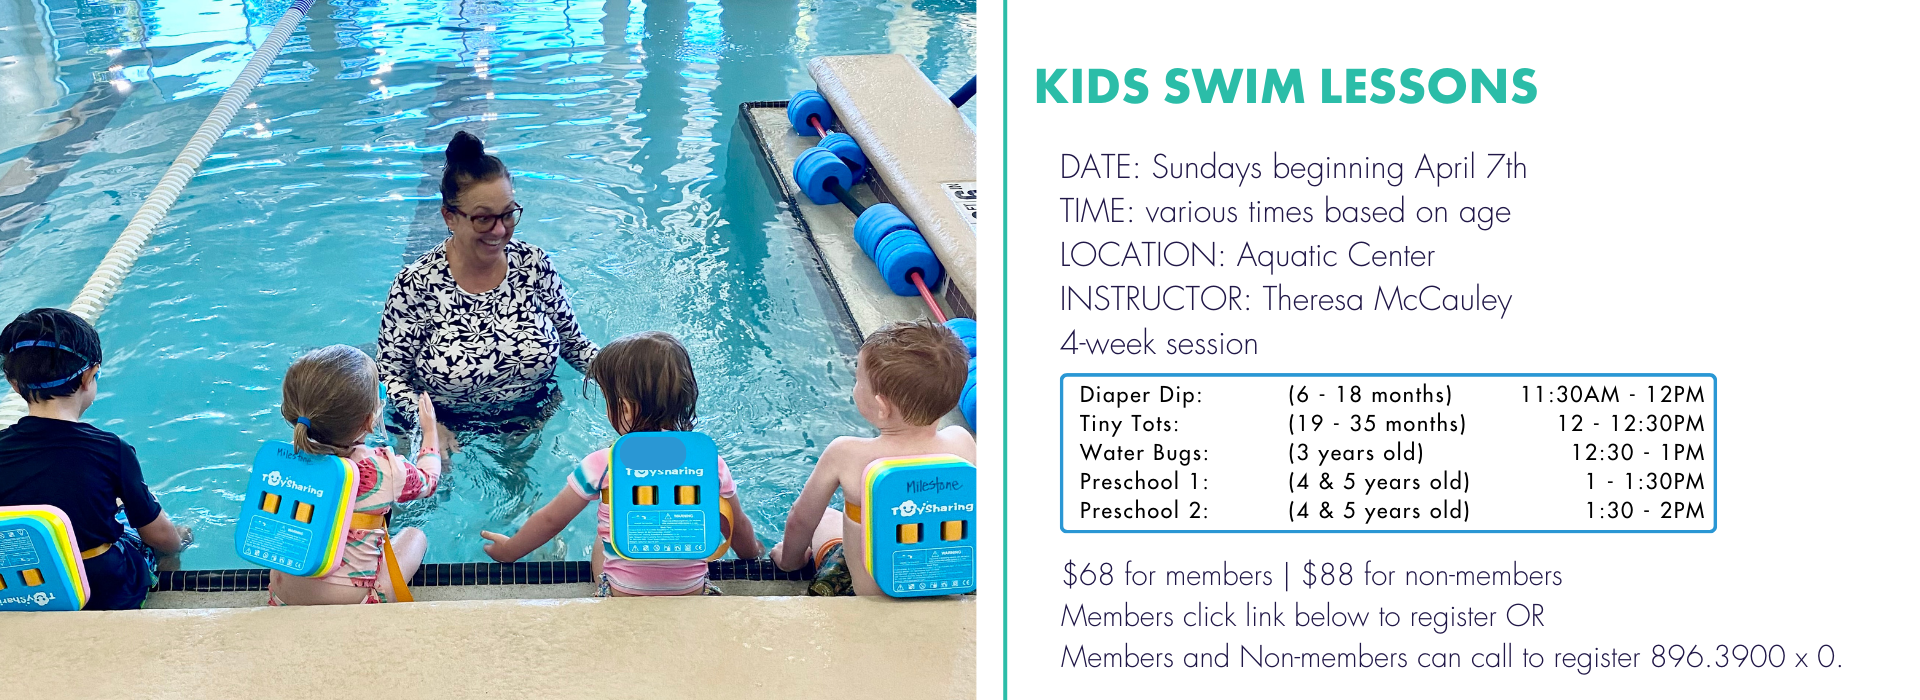 Kids Swim Lessons-1